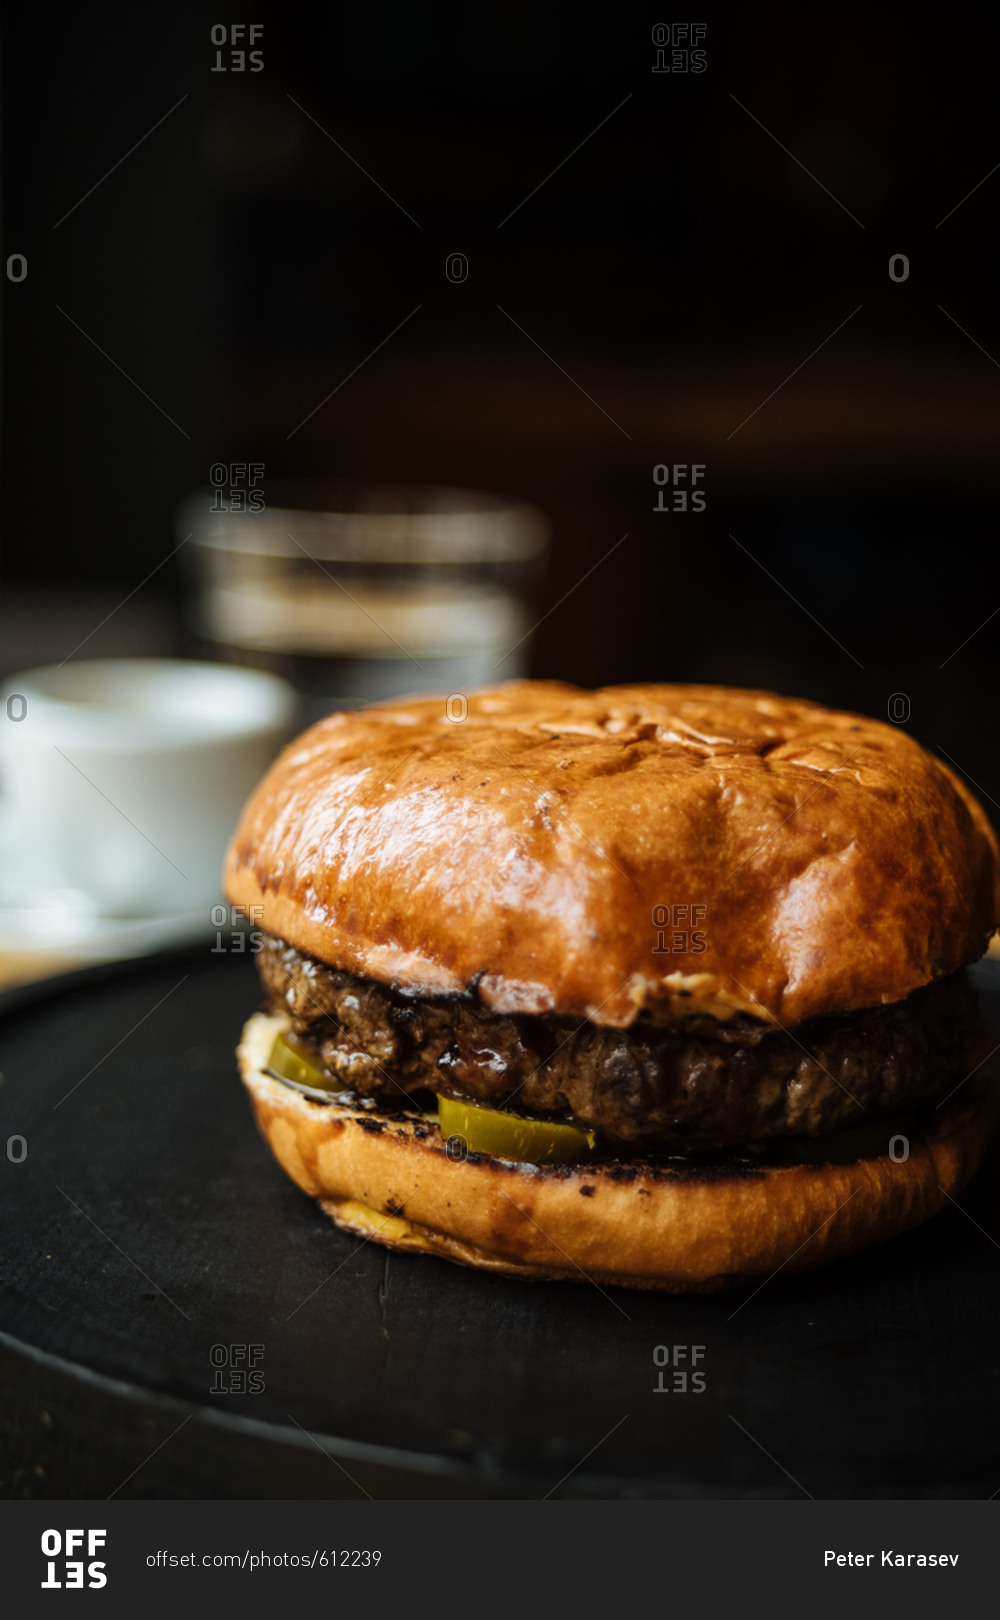 Hamburger with jalapeno